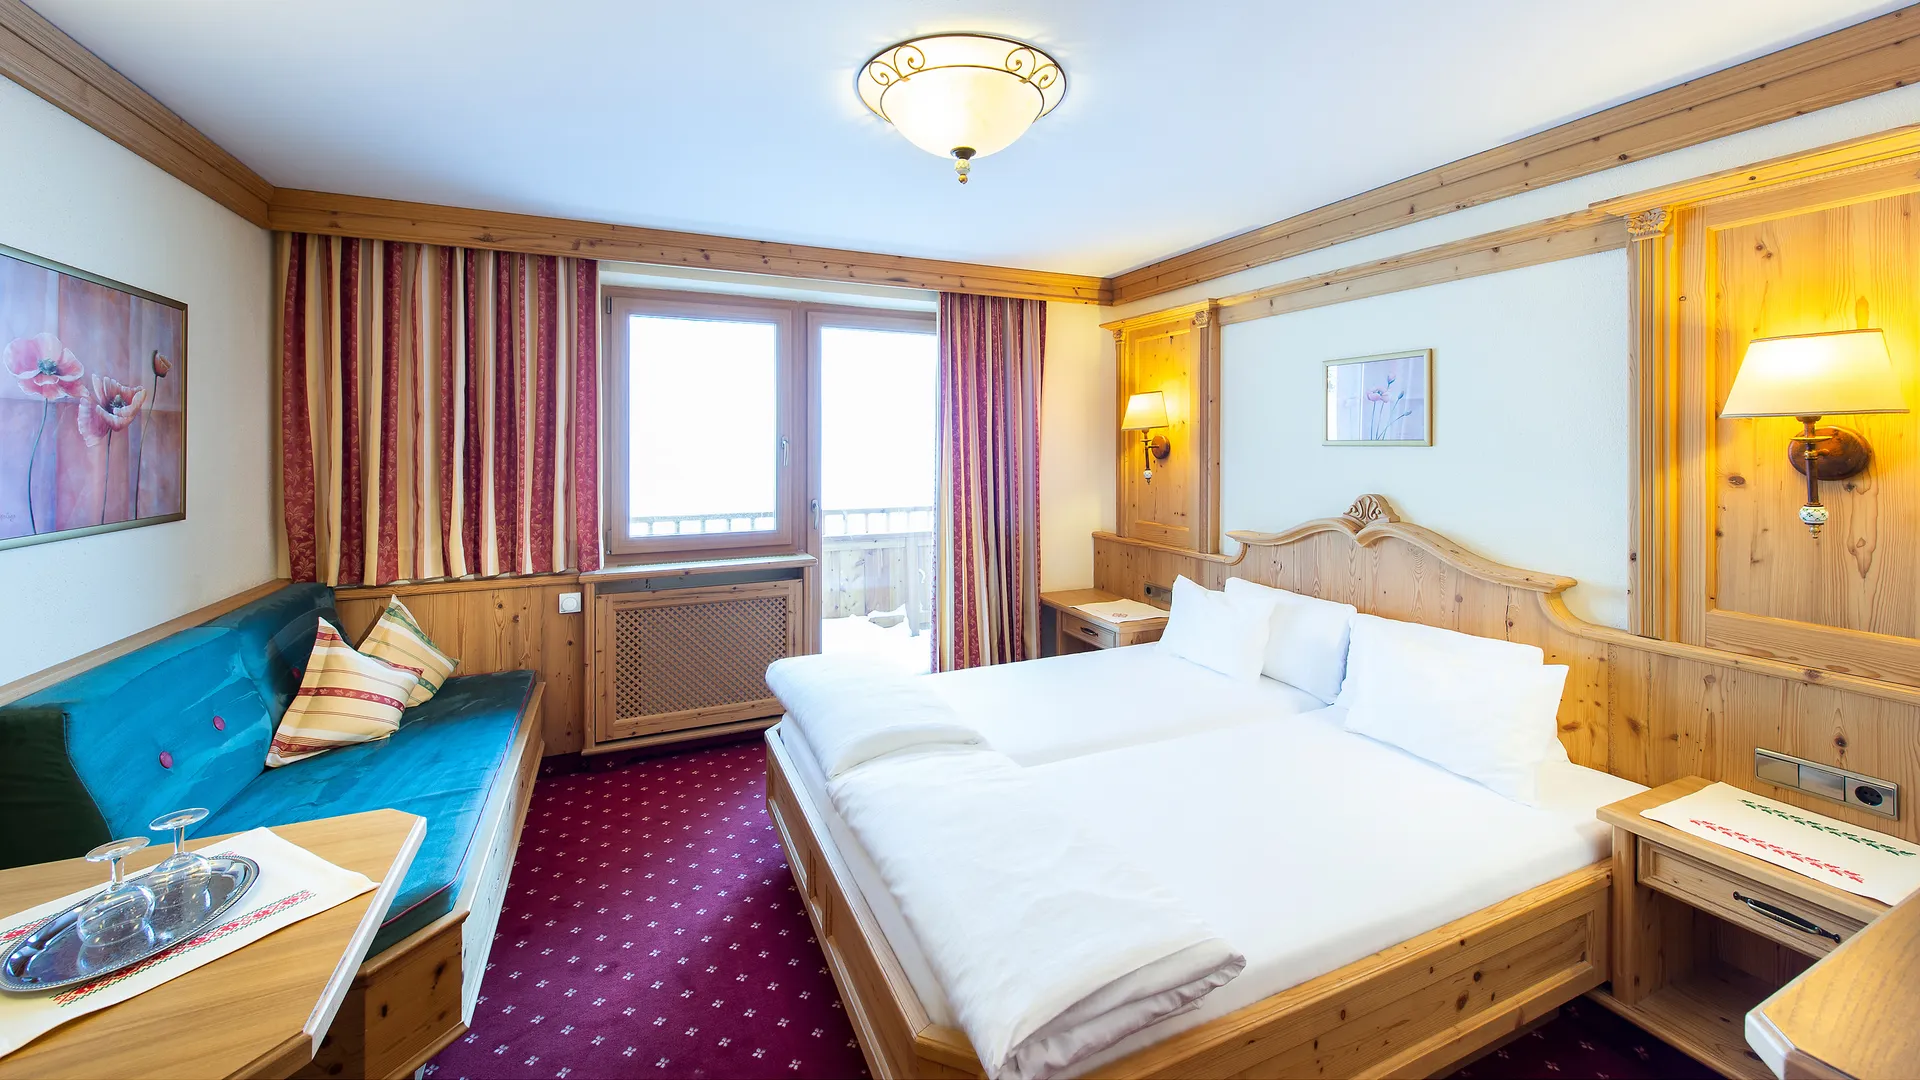 Alpenromantik Hotel Wirler Hof